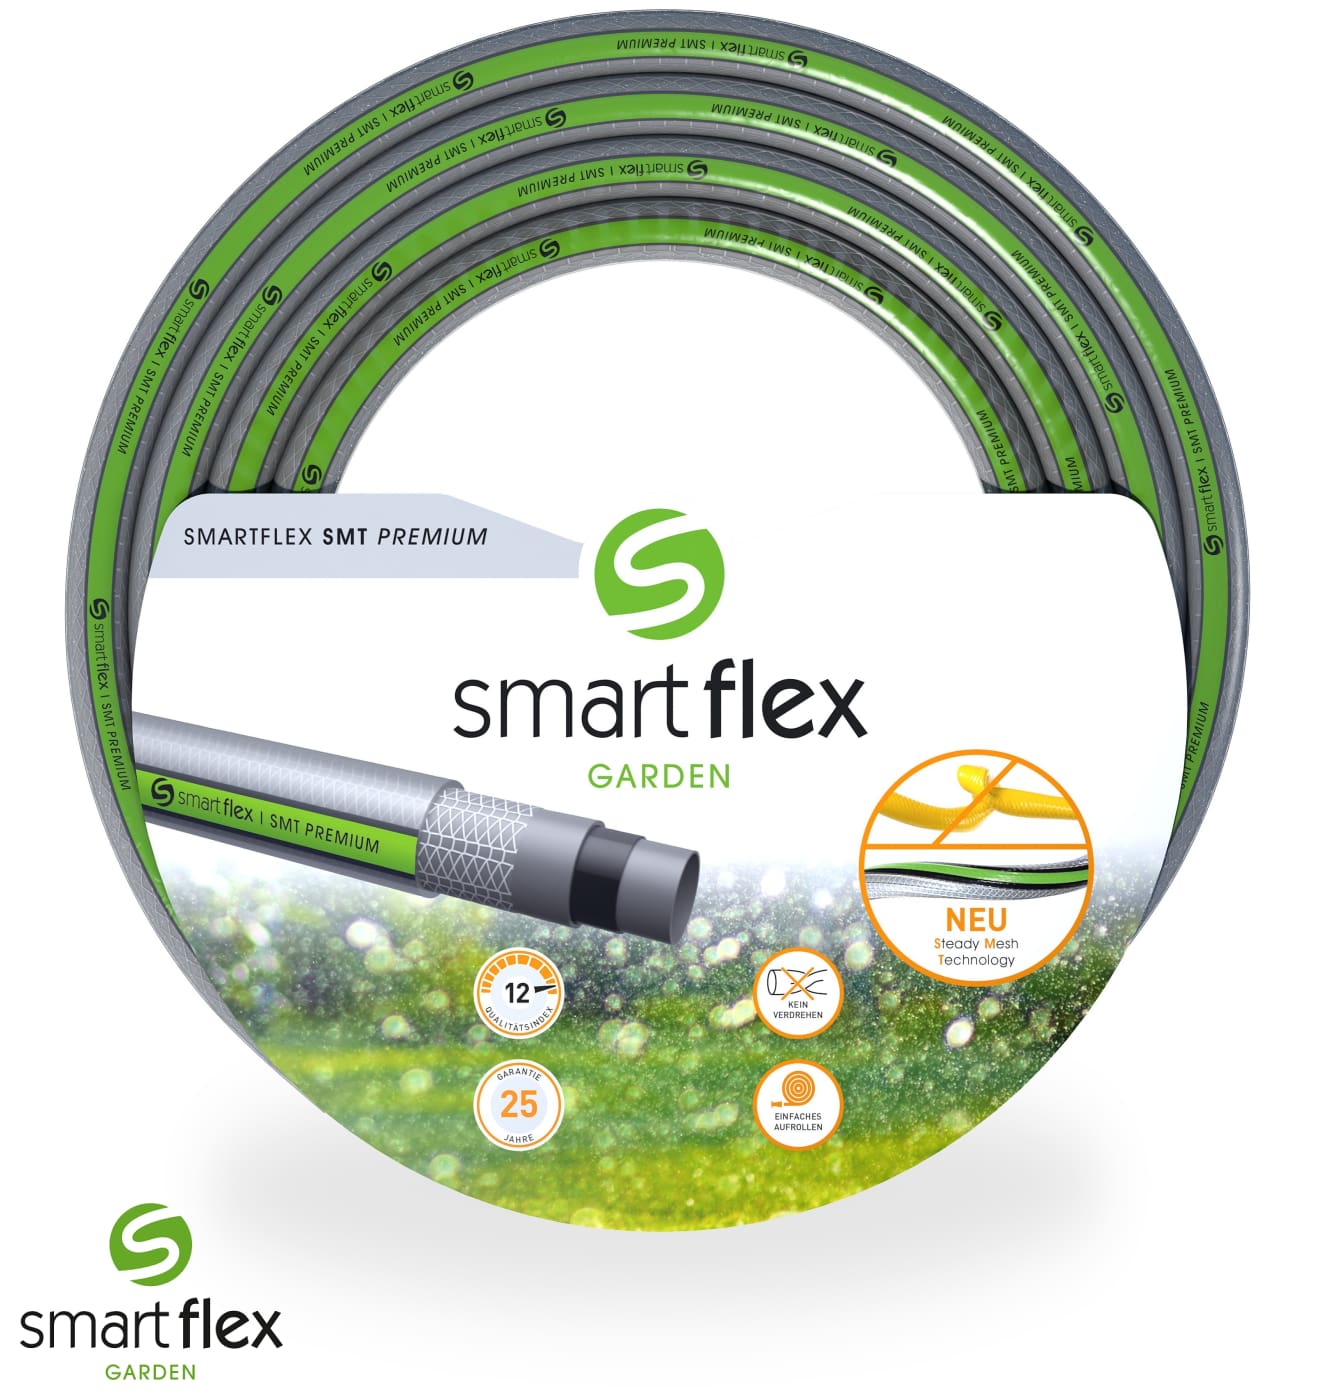 Smartflex SMT Premium